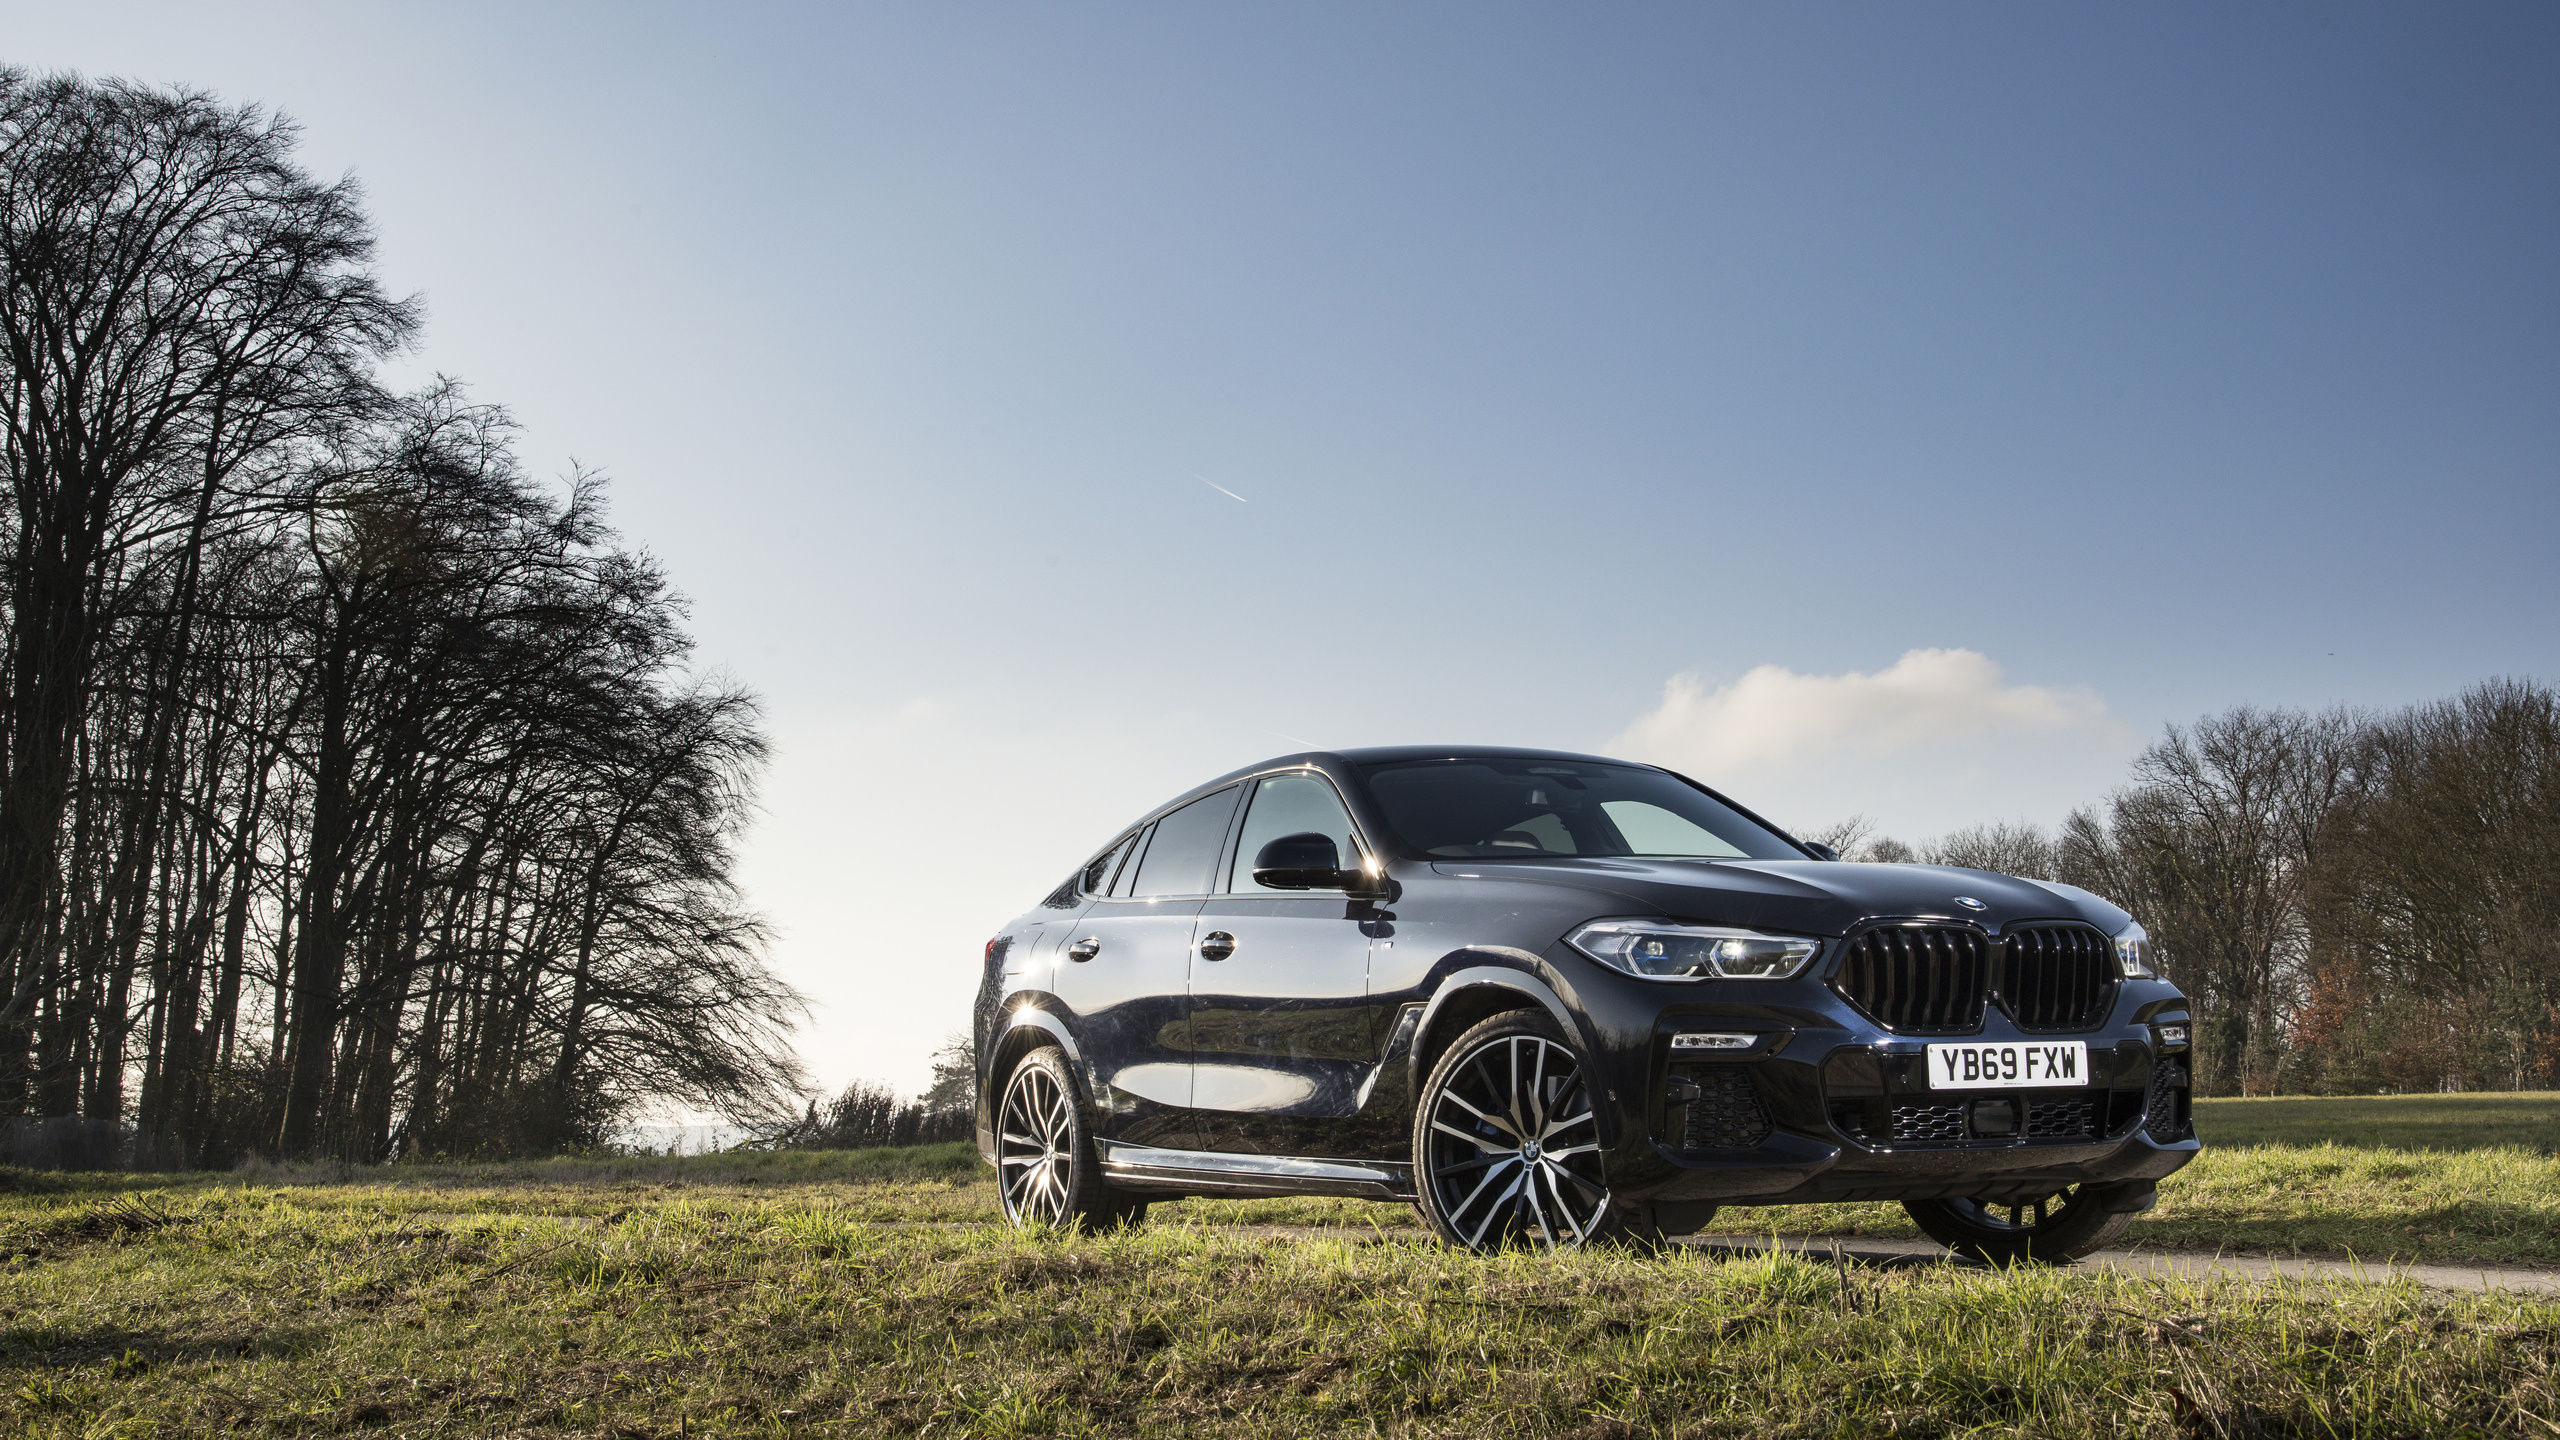 BMW X6, xDrive conqueror, Stunning 1440p resolution, Breathtaking visuals, 2560x1440 HD Desktop